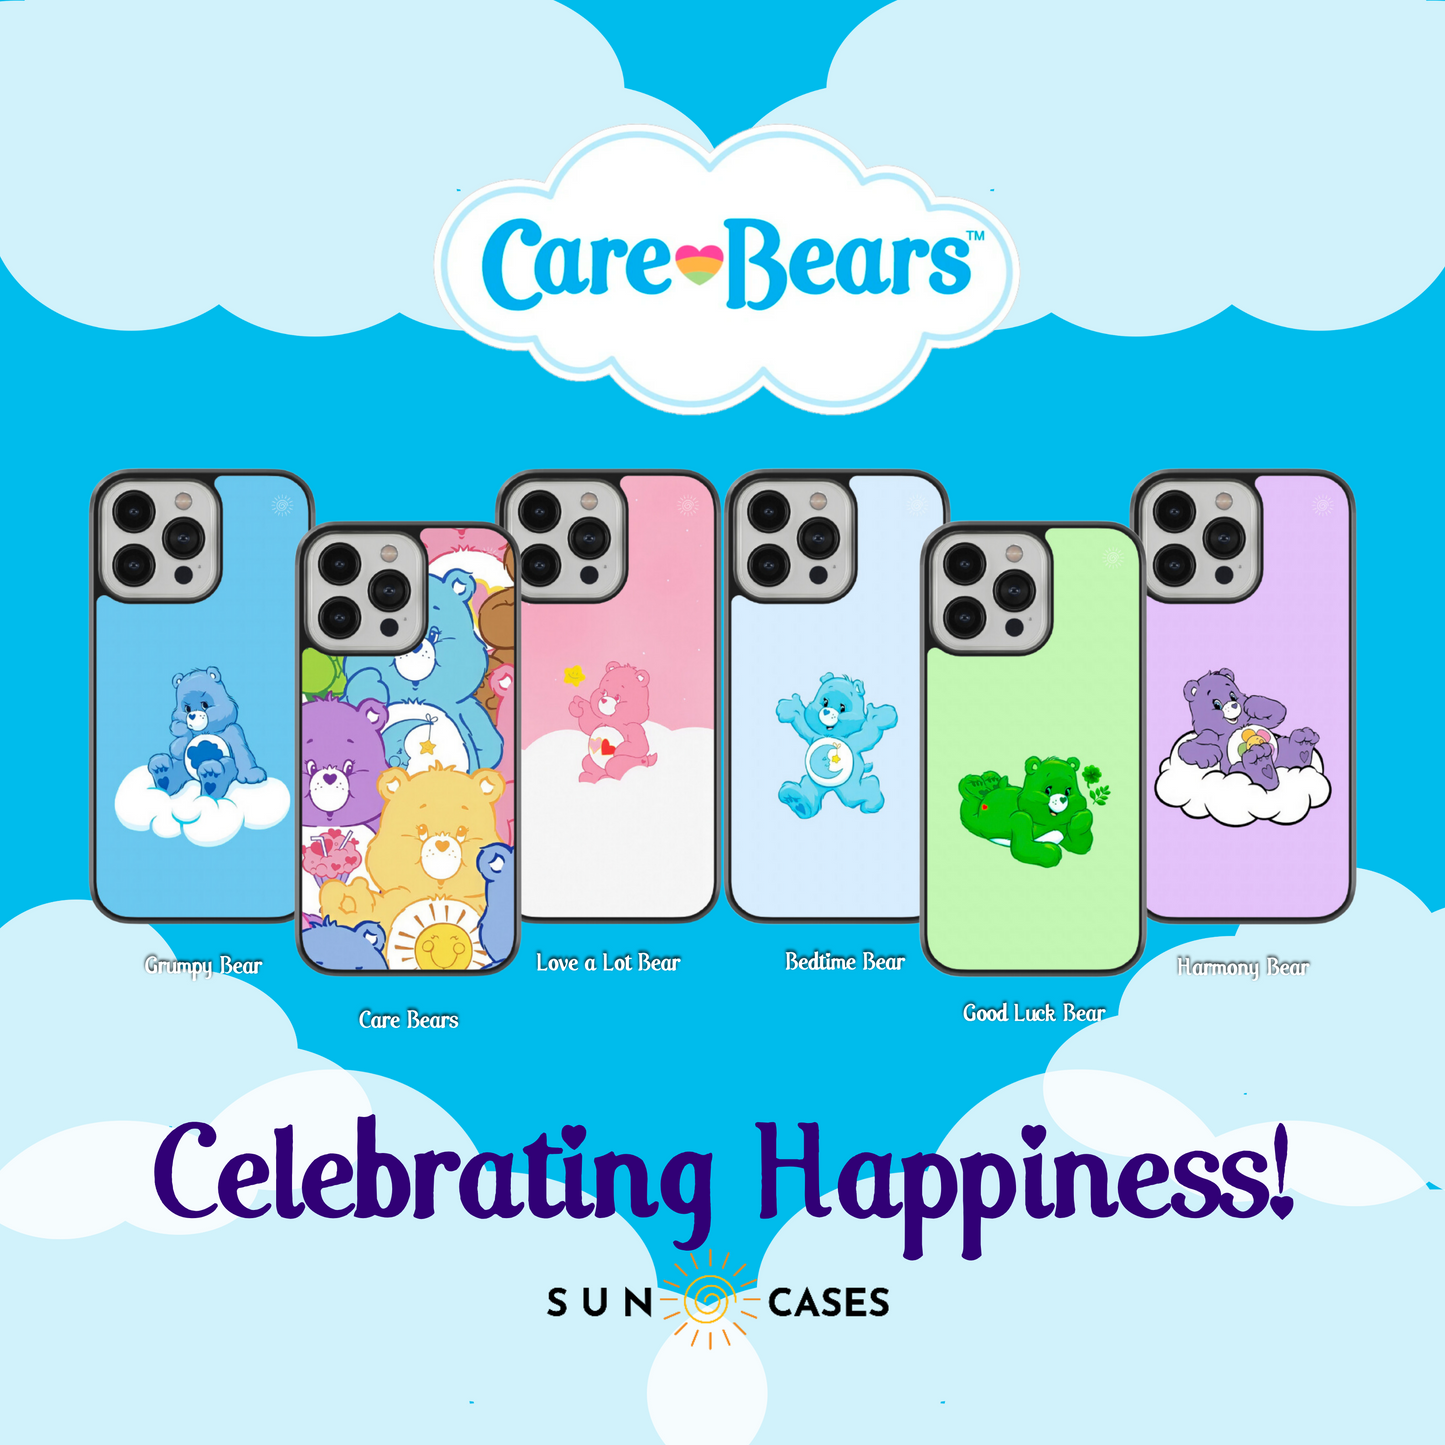 Care Bears Case - Care Bears